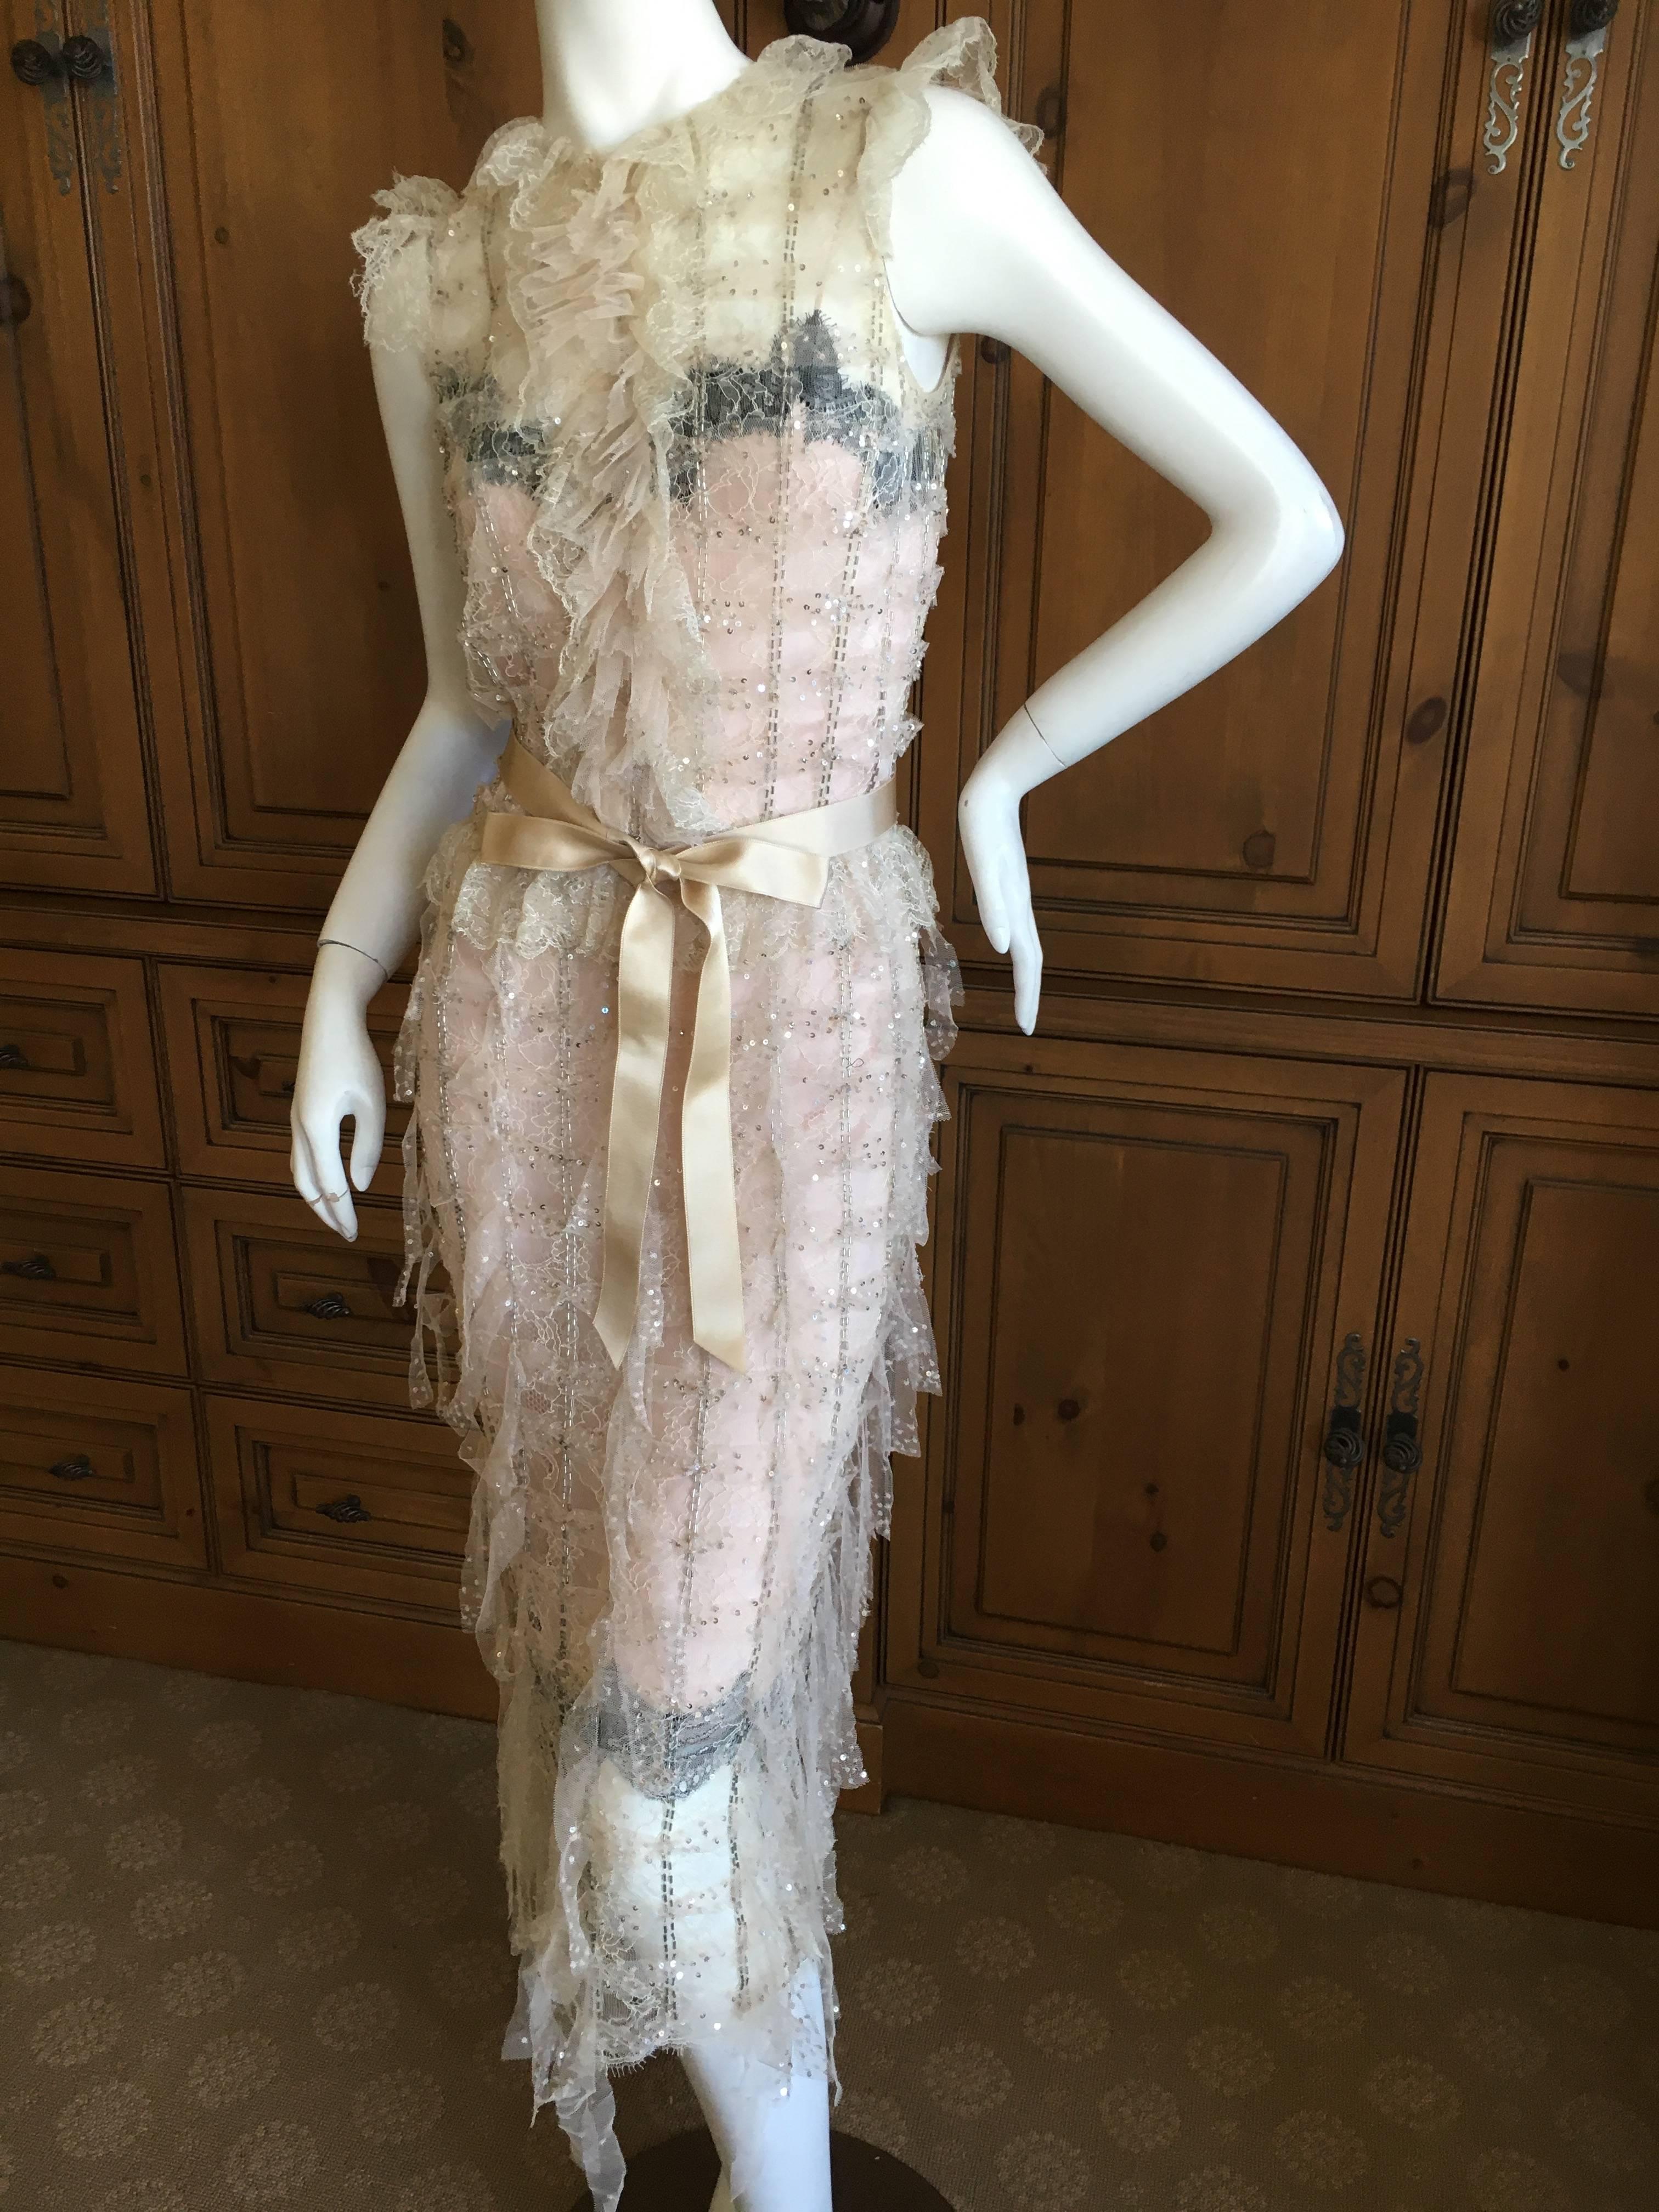  Oscar de la Renta Sheer Embellished Vintage Tiered Ruffle Trim Evening Dress  In Excellent Condition For Sale In Cloverdale, CA